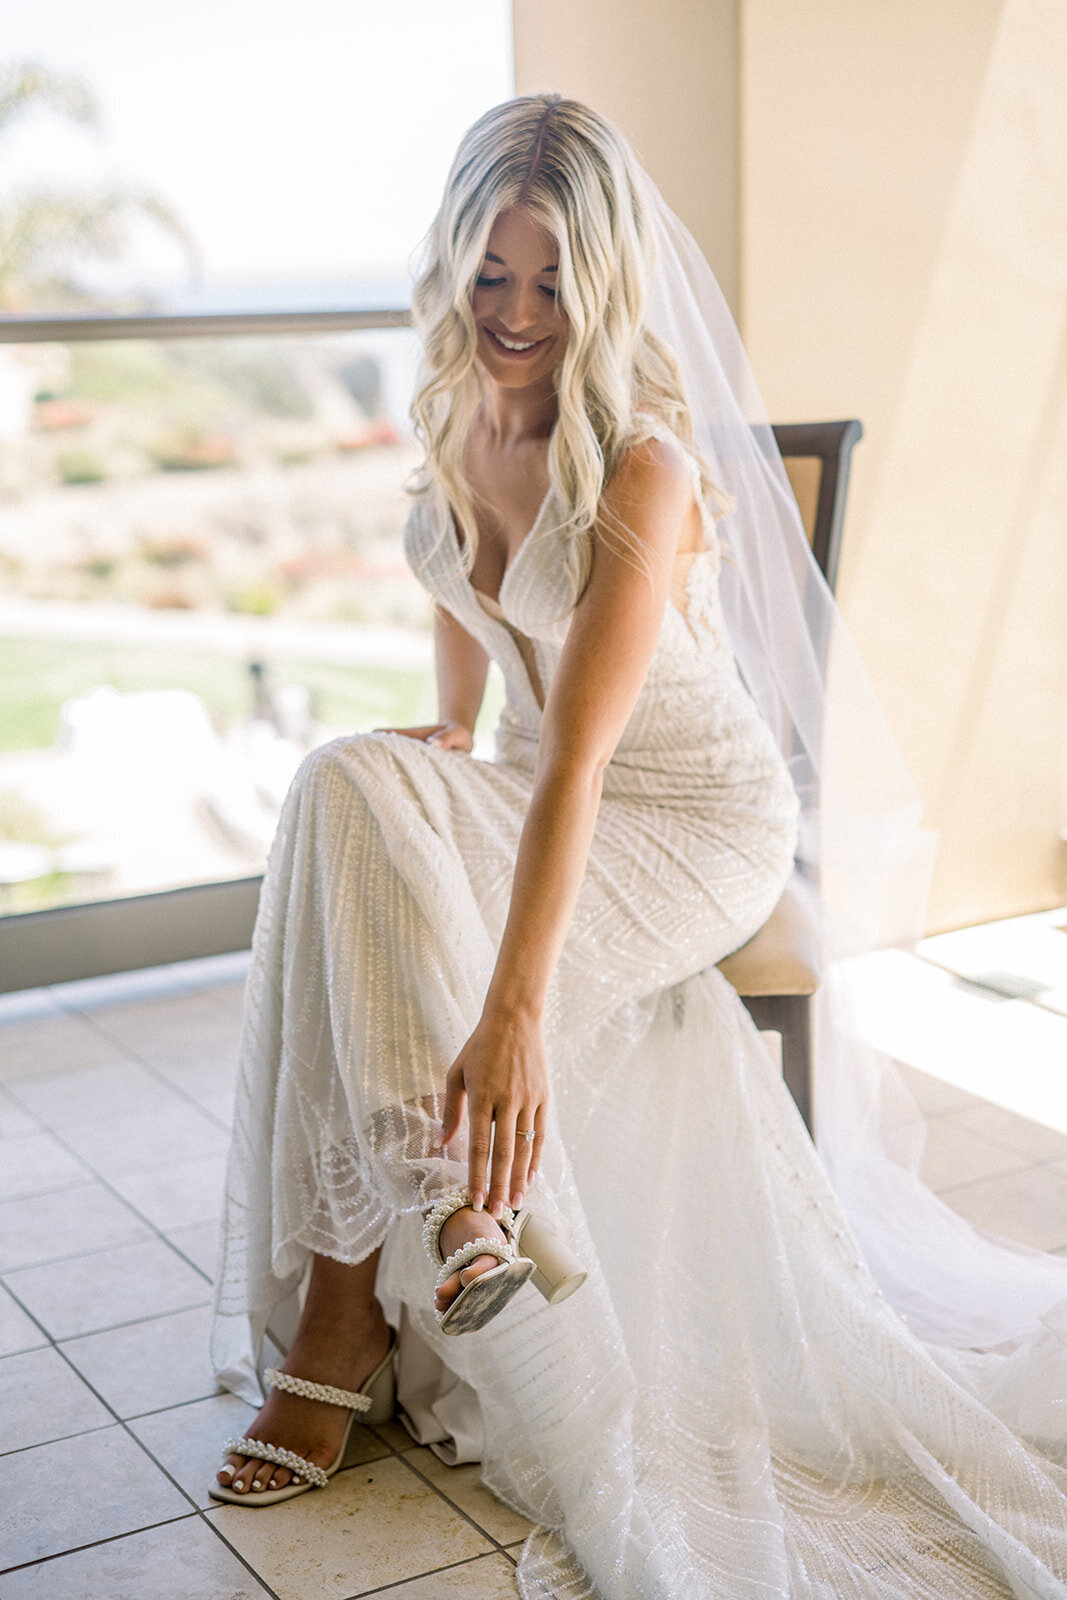 Bride puts on wedding heels at Dolphin Bay Resort in Pismo Beach, CA